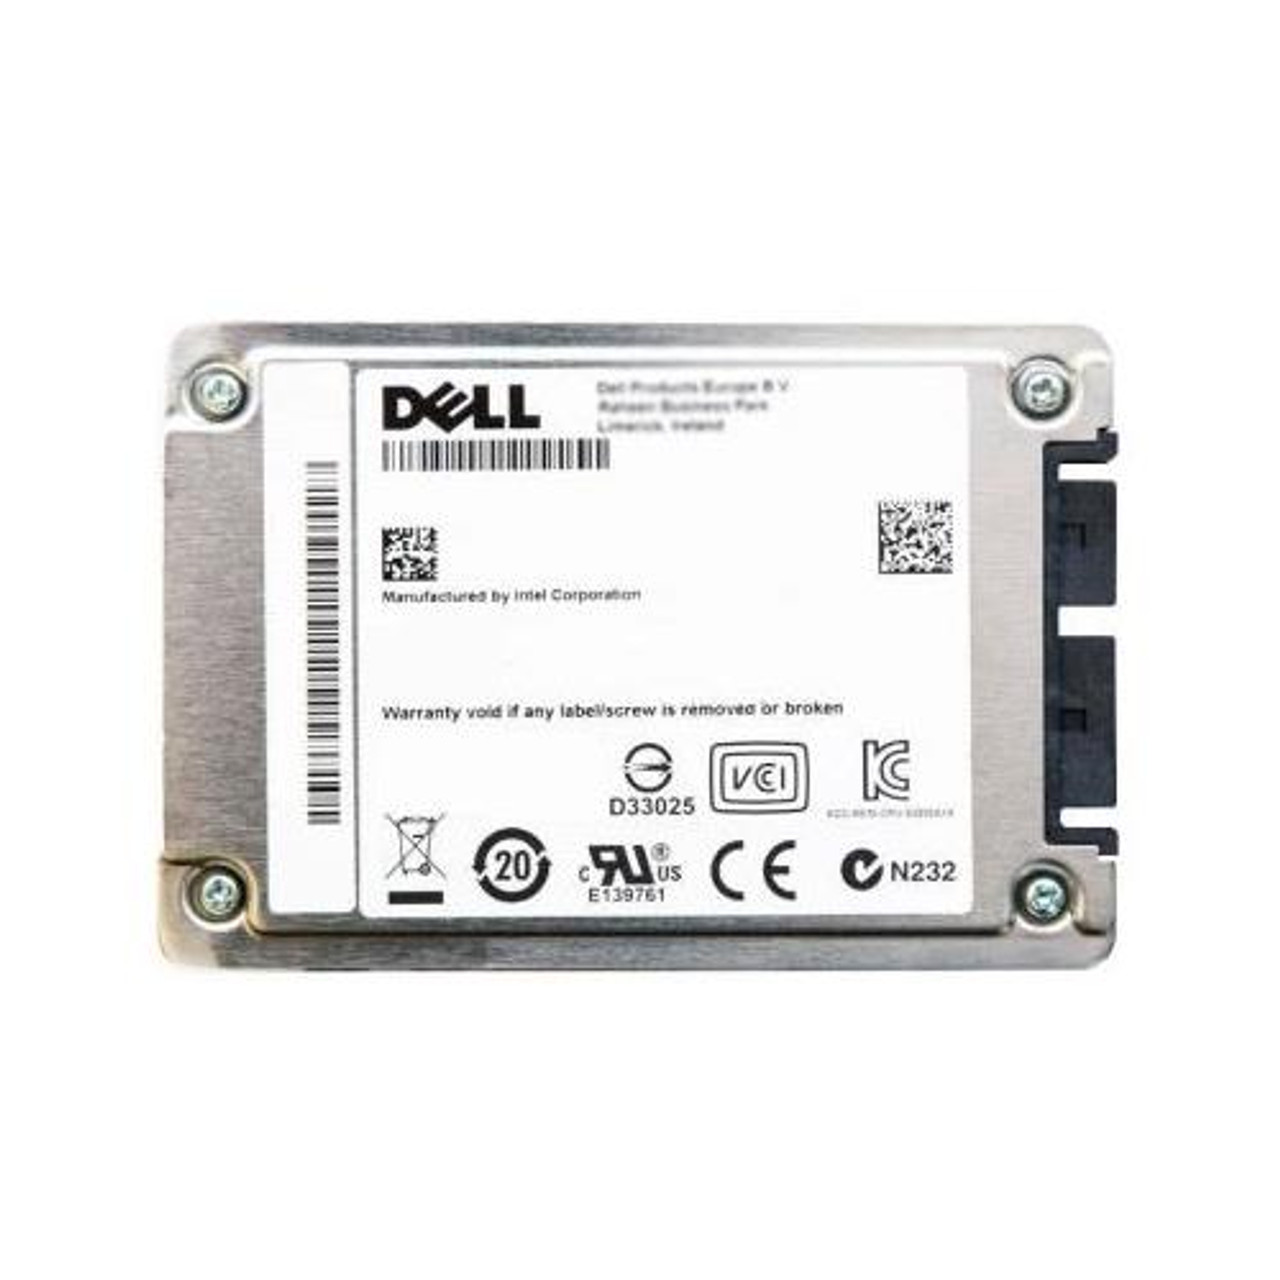 002KFM Dell 50GB SATA 3Gbps 1.8-inch MLC Internal Solid State